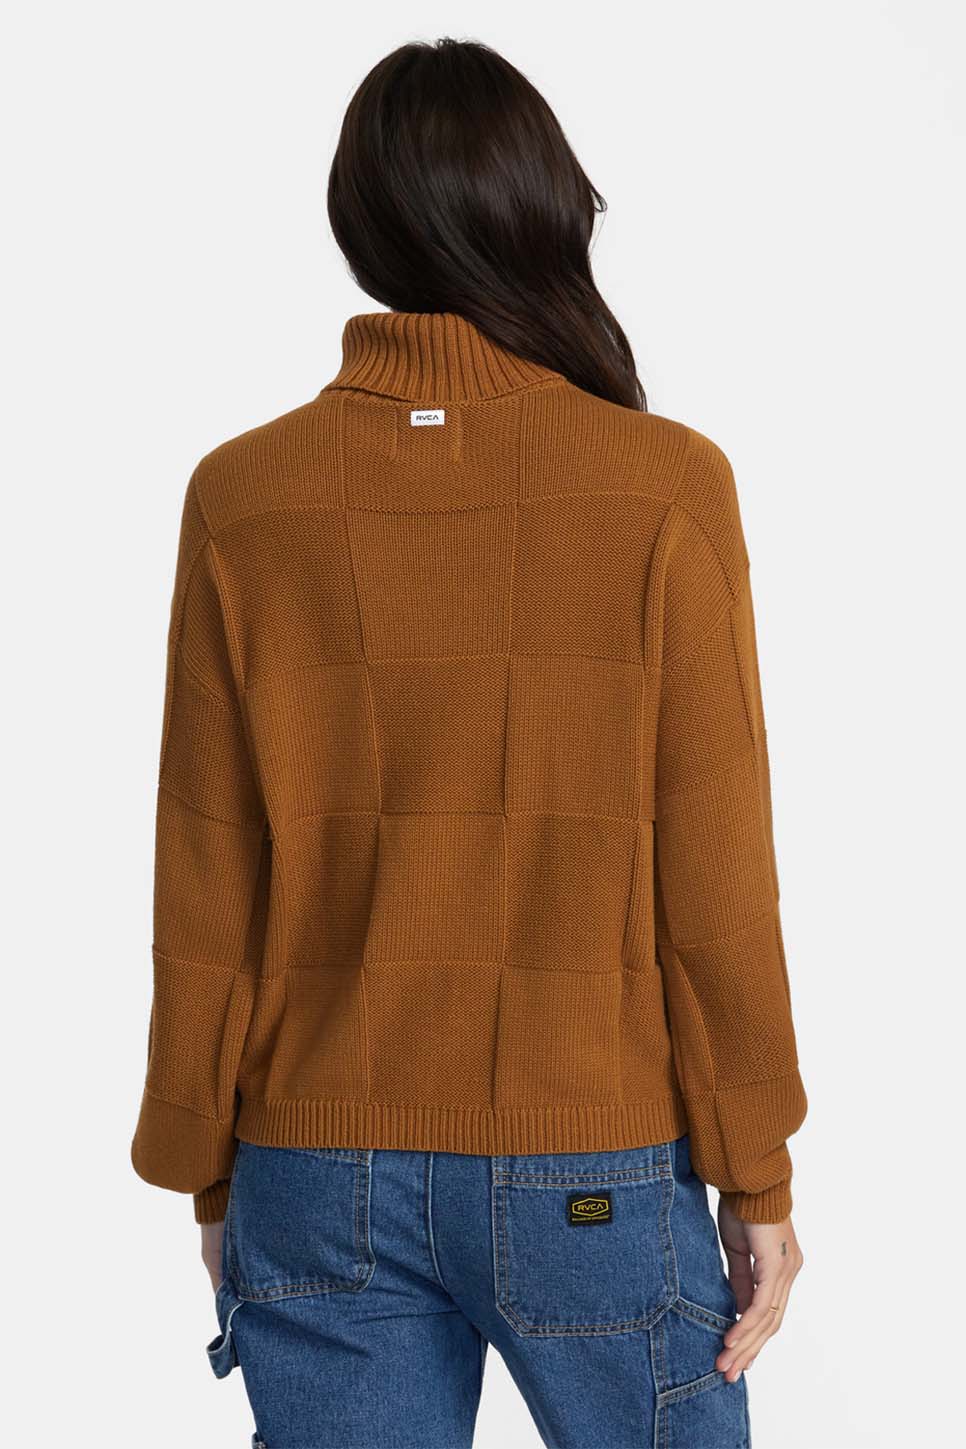 RVCA - Vineyard Sweater - Workwear Brown - Back